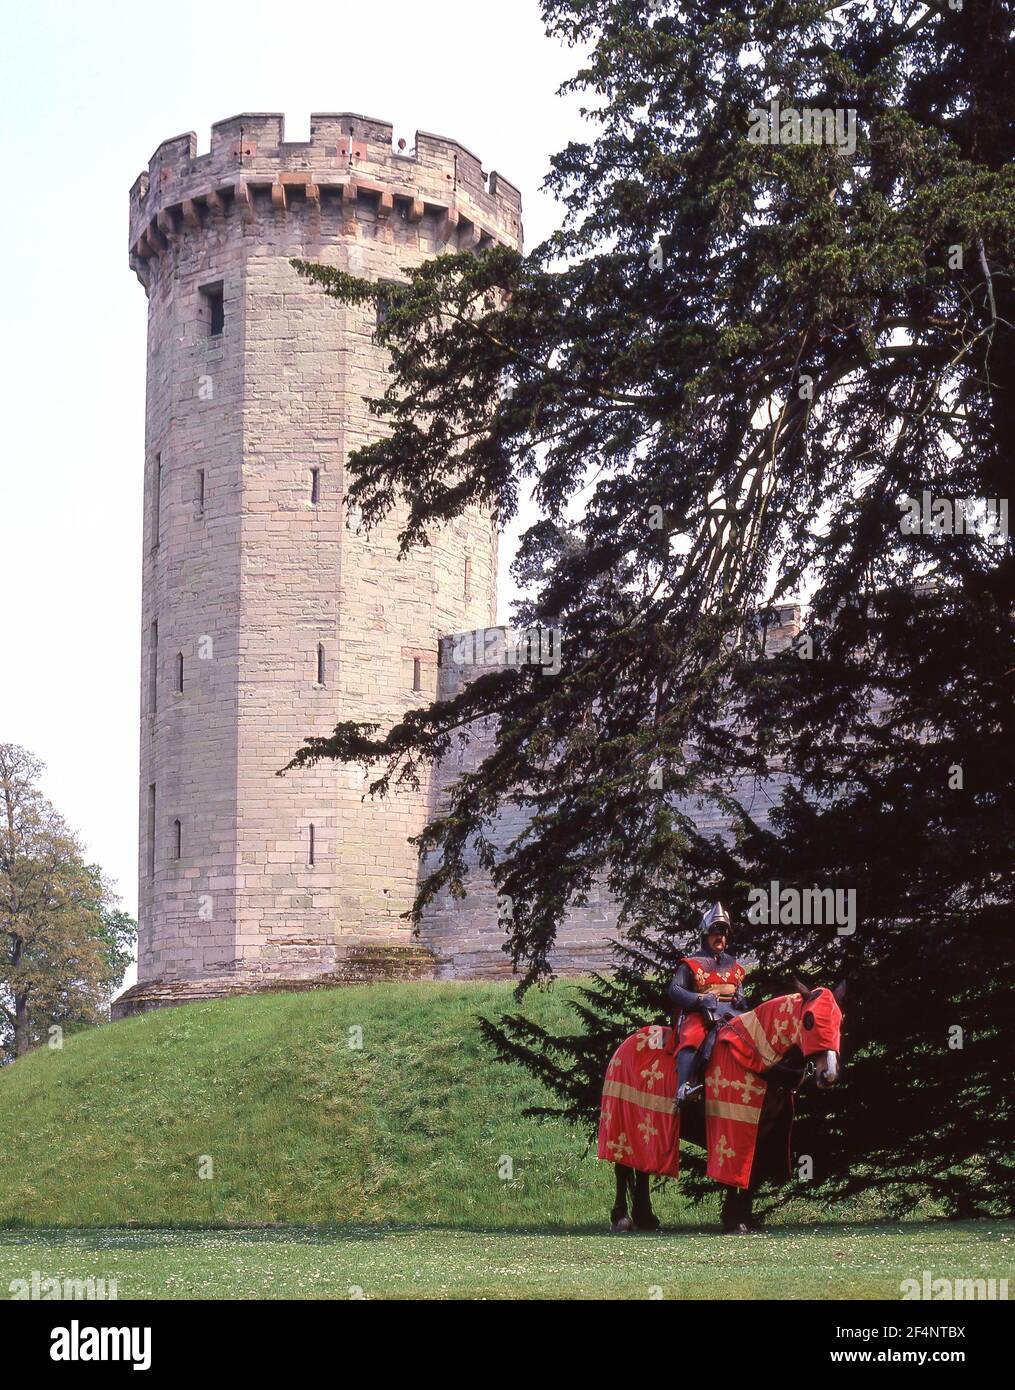 Guy's Tower and Knight on horseback, Warwick Castle, Warwick, Warwickshire, England, United Kingdom Stock Photo